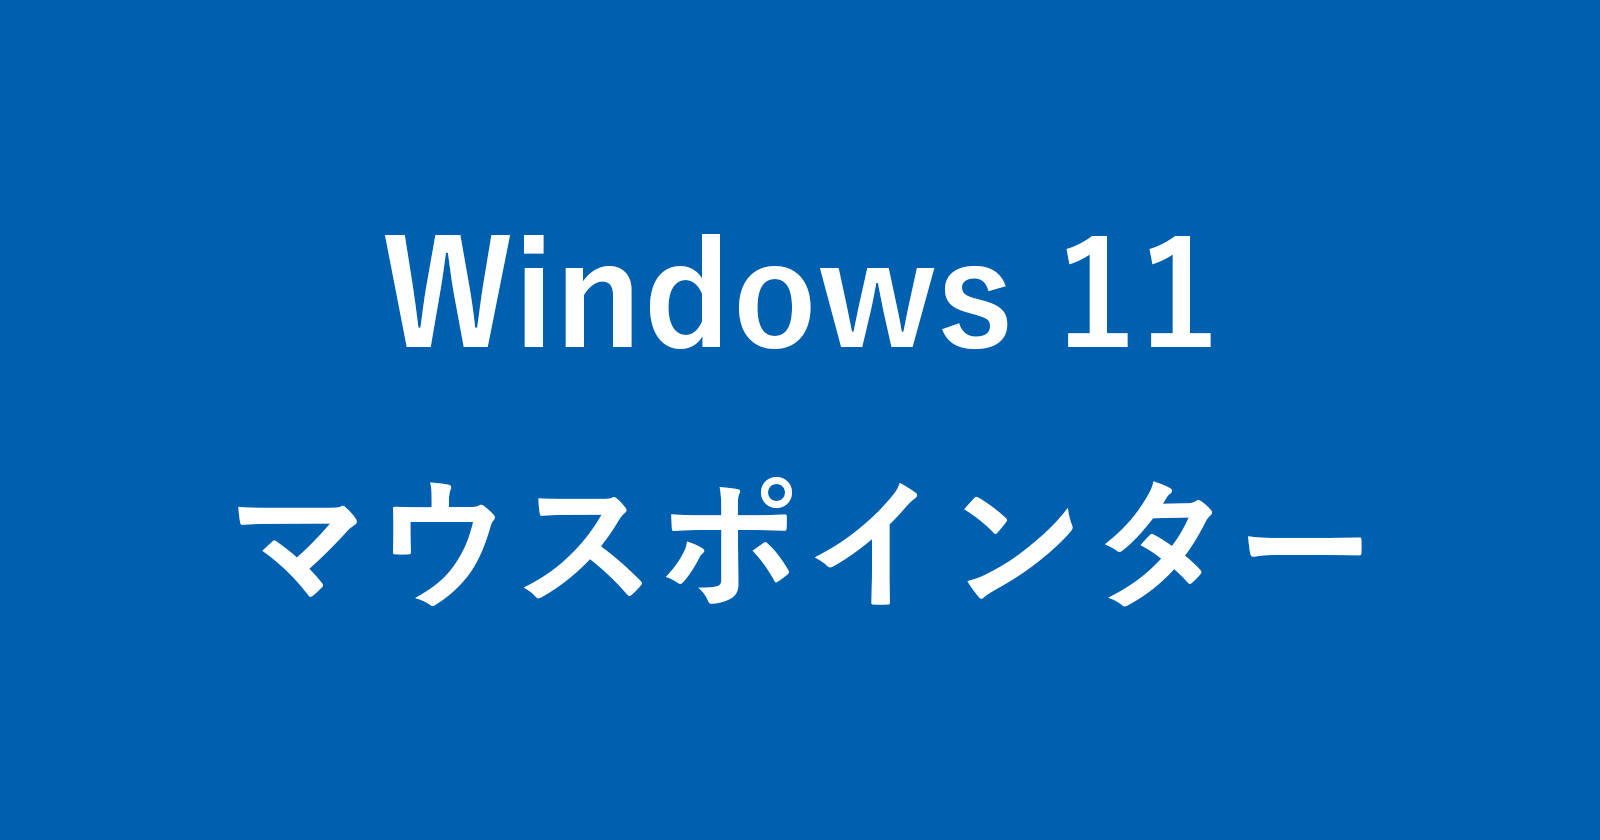 windows 11 mouse pointer